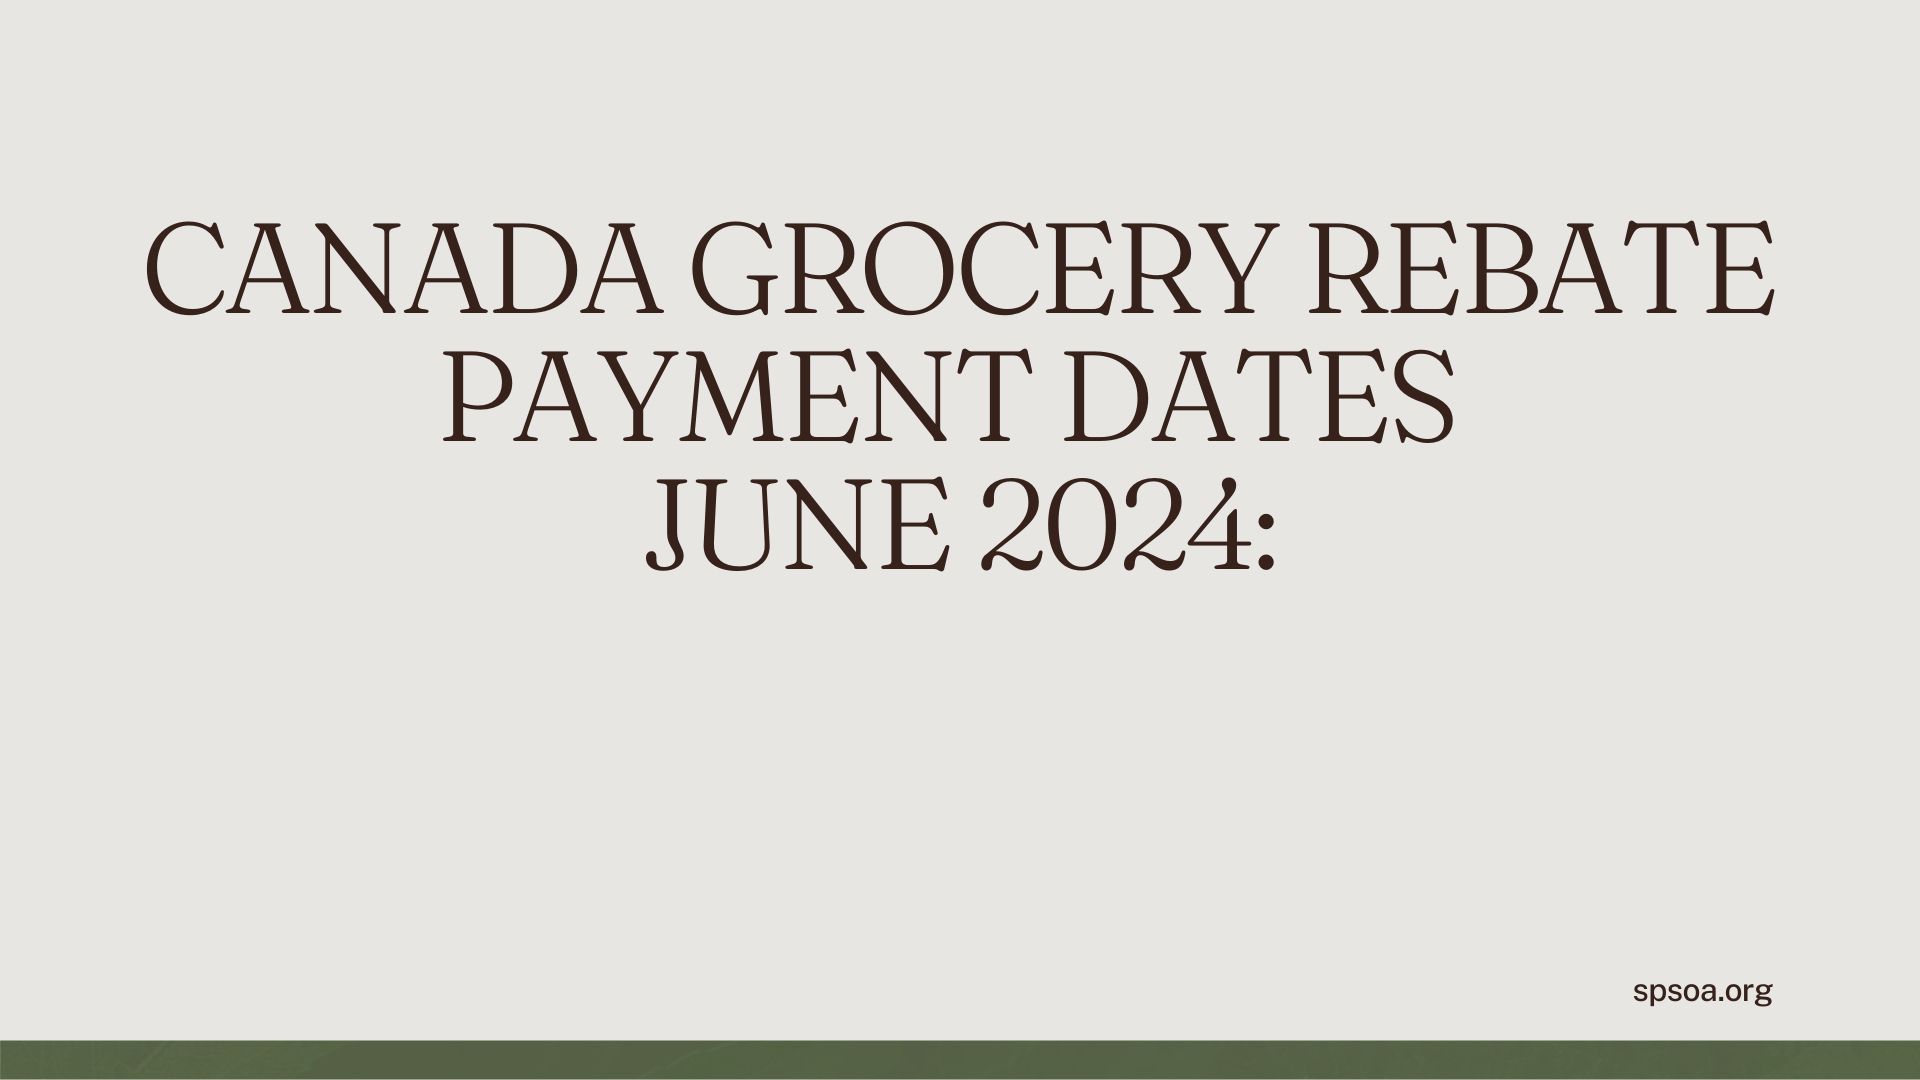 Canada Grocery Rebate Payment Dates June 2024